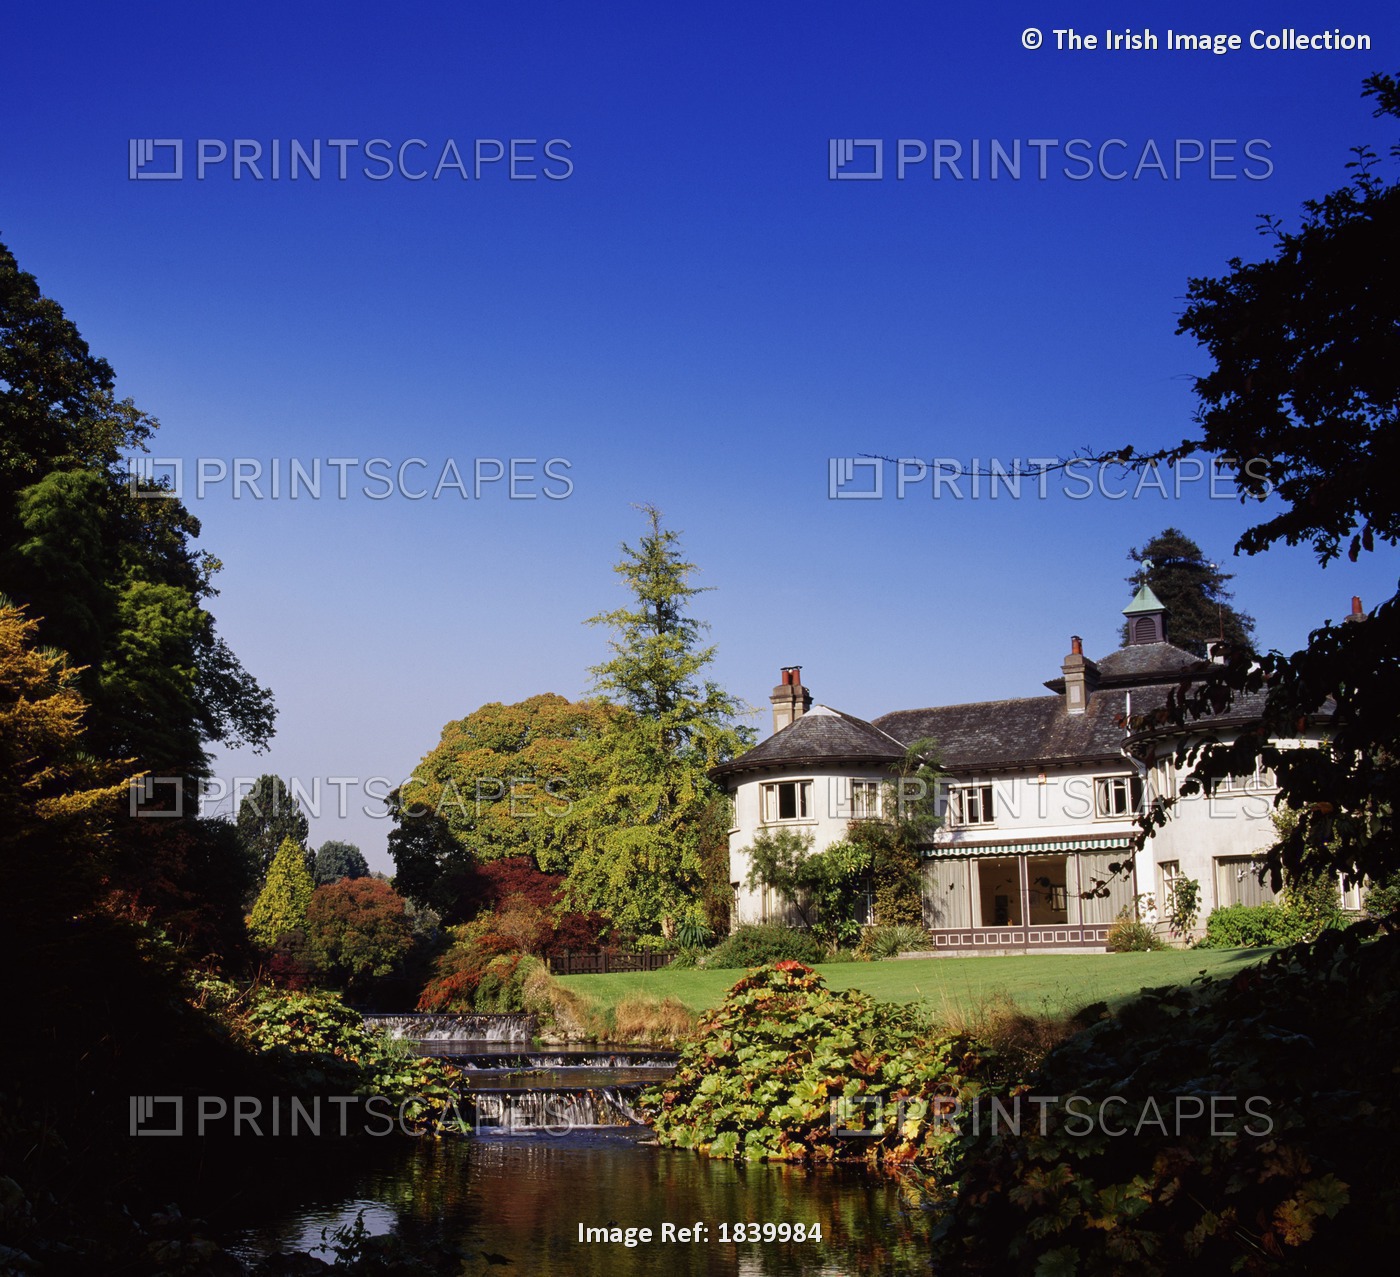 Mount Usher House, River Vartry, Co Wicklow, Ireland